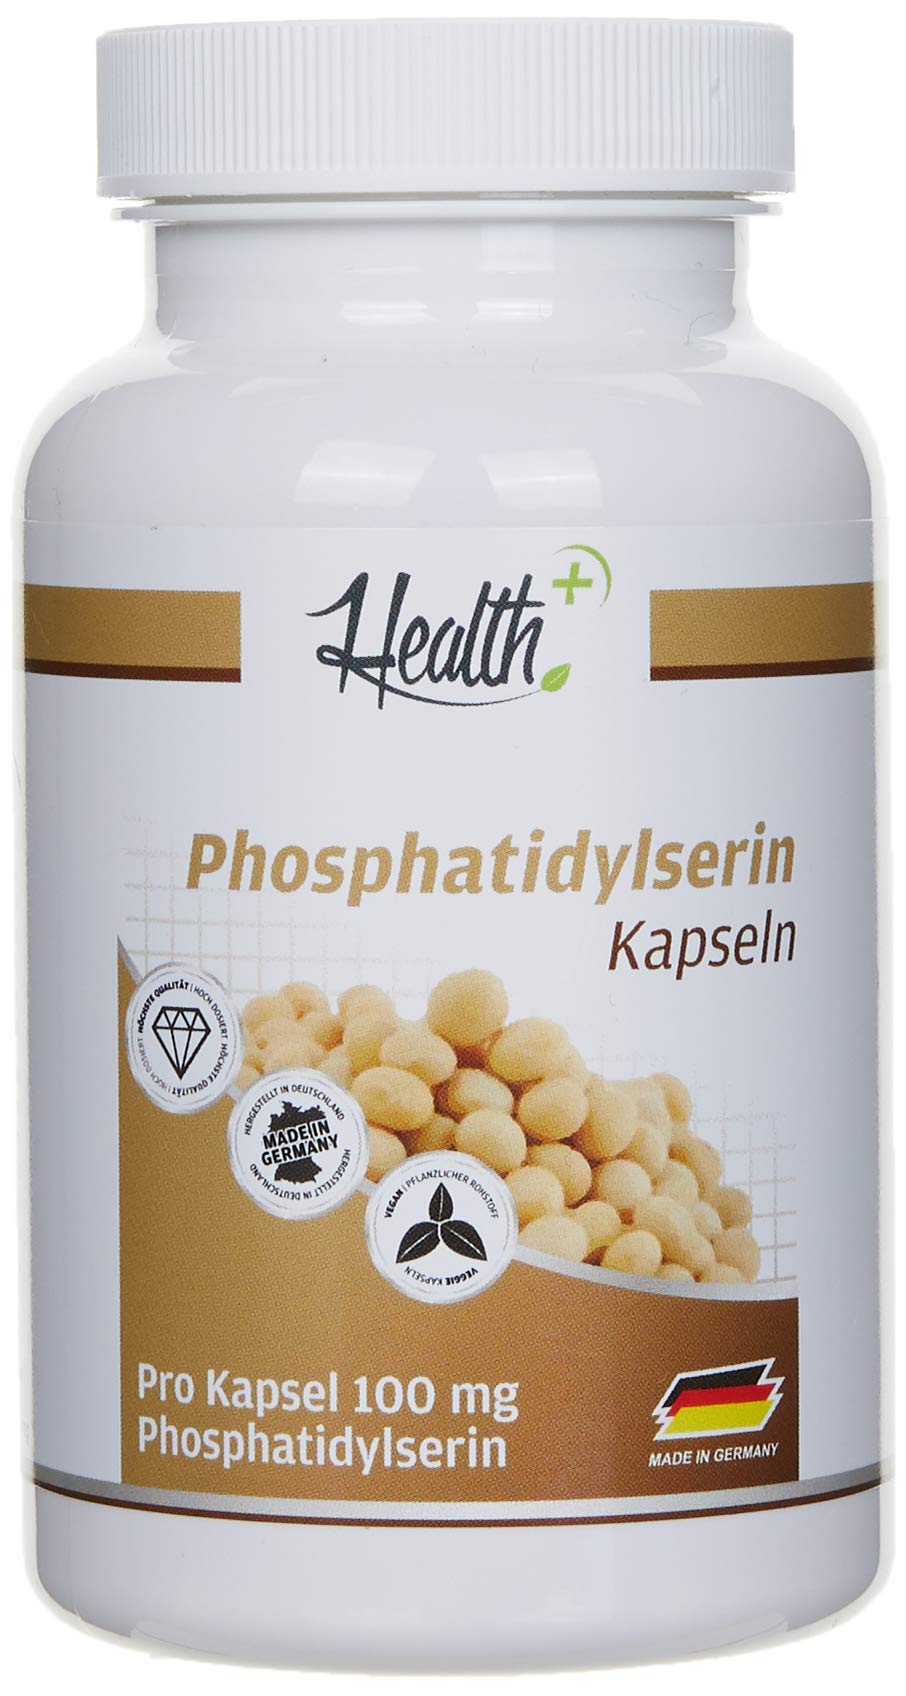 Zec+ Nutrition Health+ Phosphatidylserin - 120 Kapseln mit 100 mg Phosphatidylserin pro Kapsel, aus Soja, für Konzentration und Gedächtnis, Made in Germany